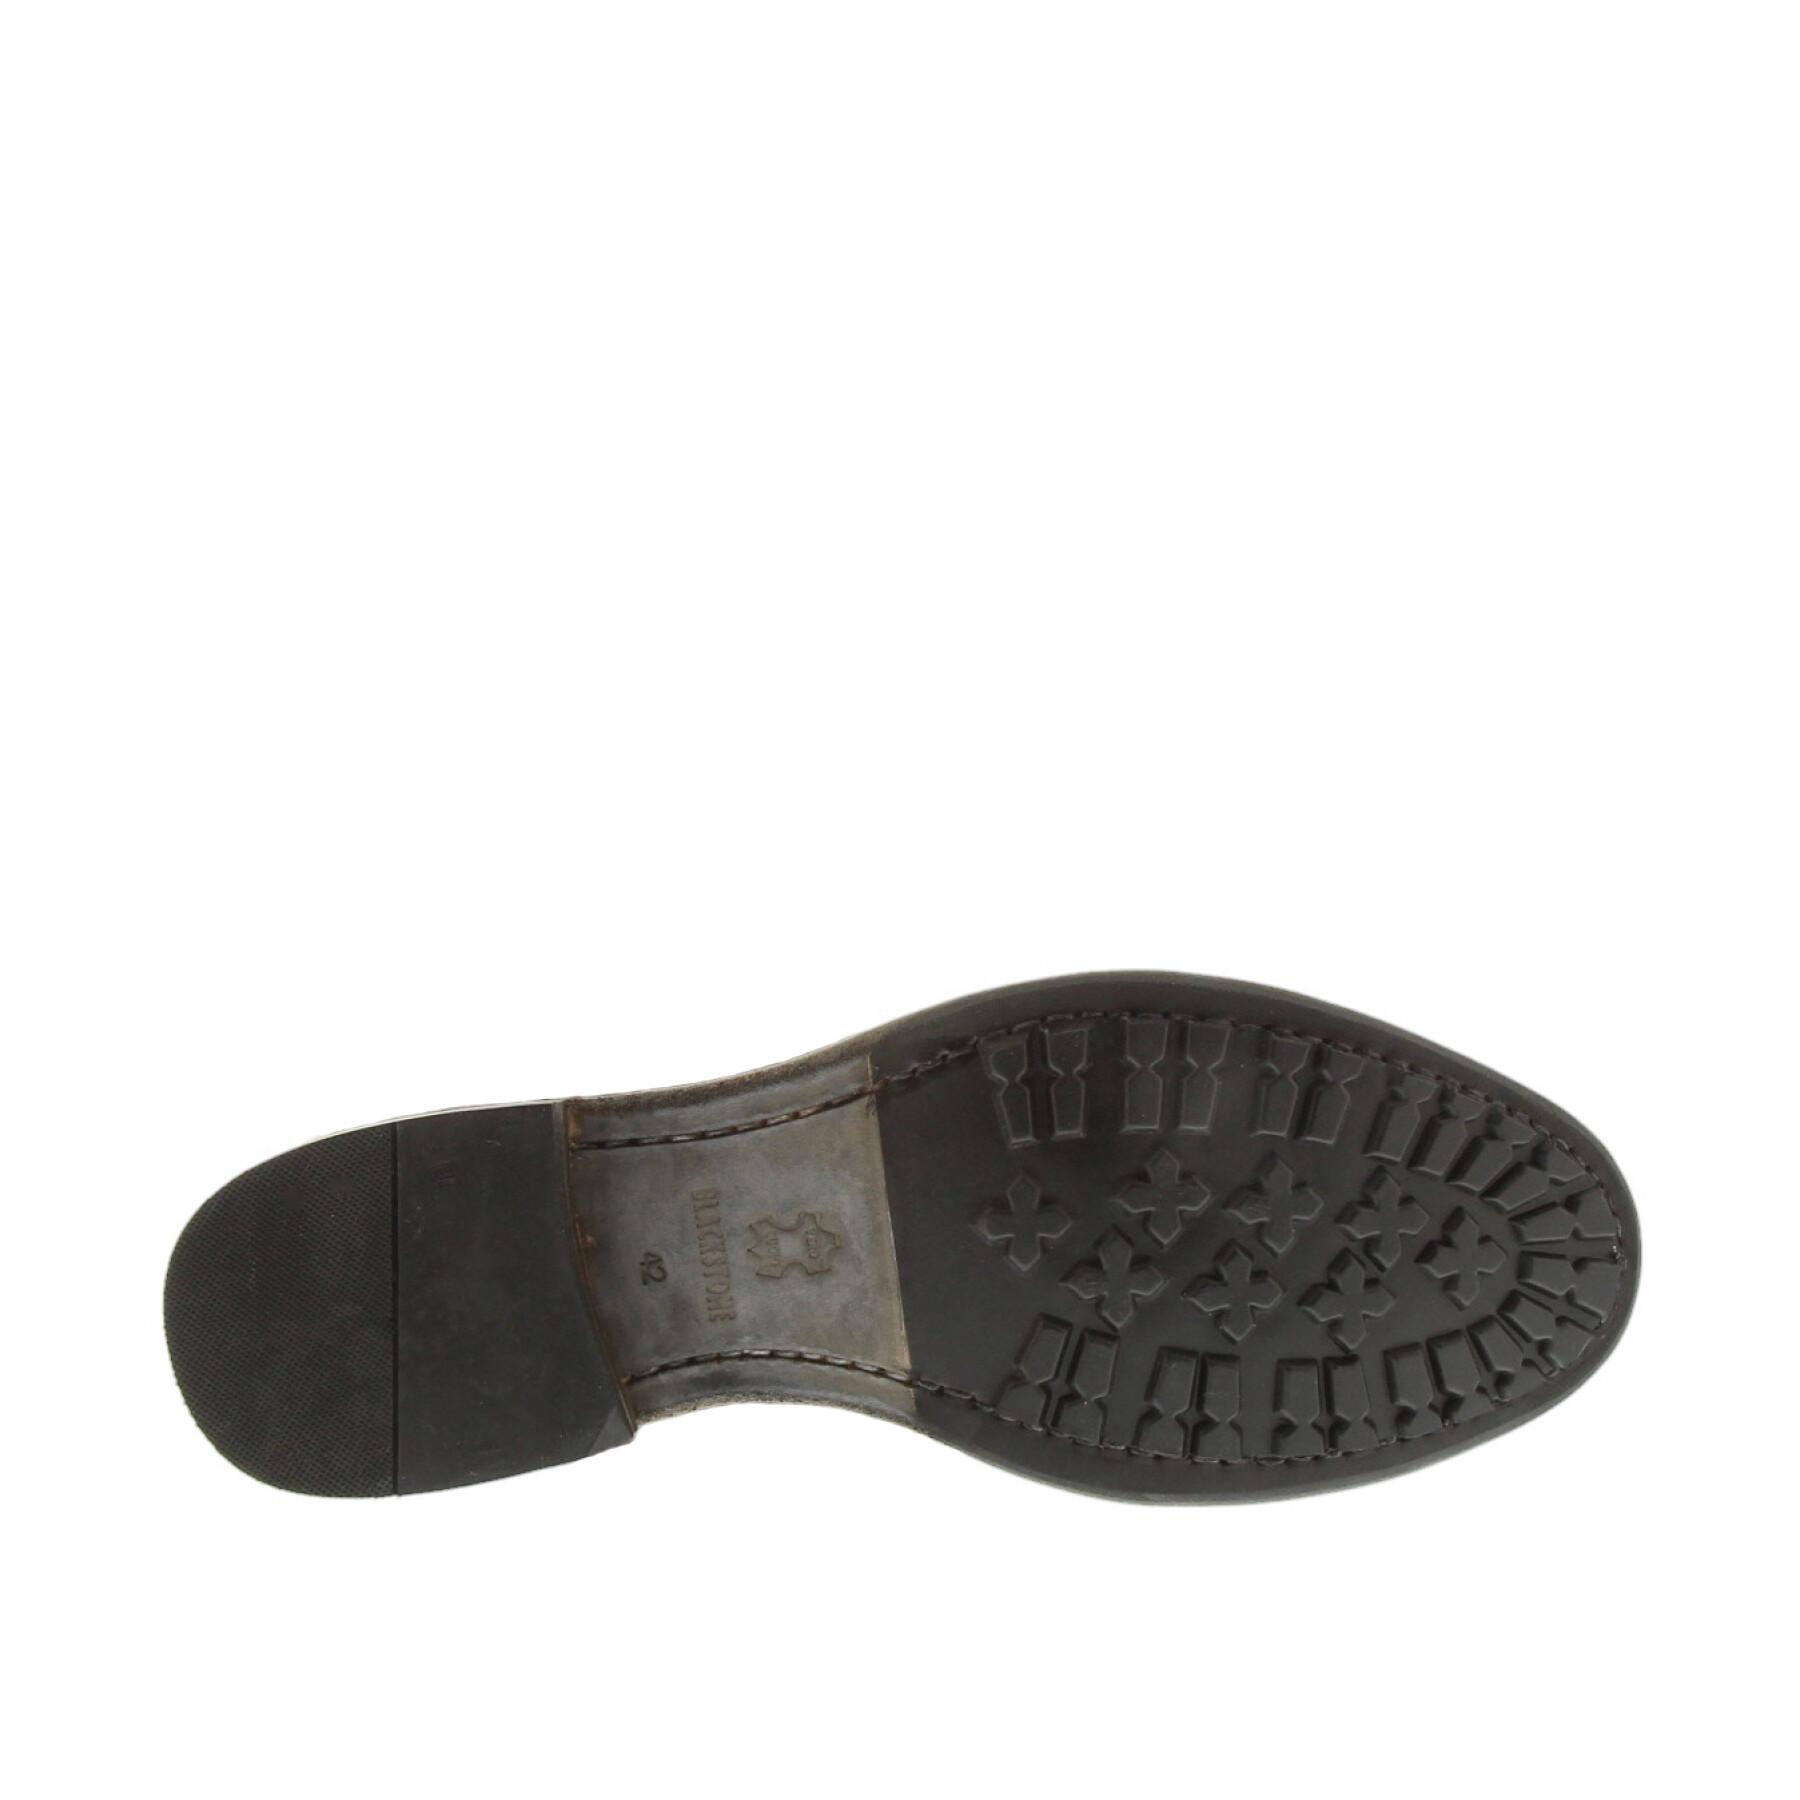 Schuhe Blackstone Classic Lace Up Boot